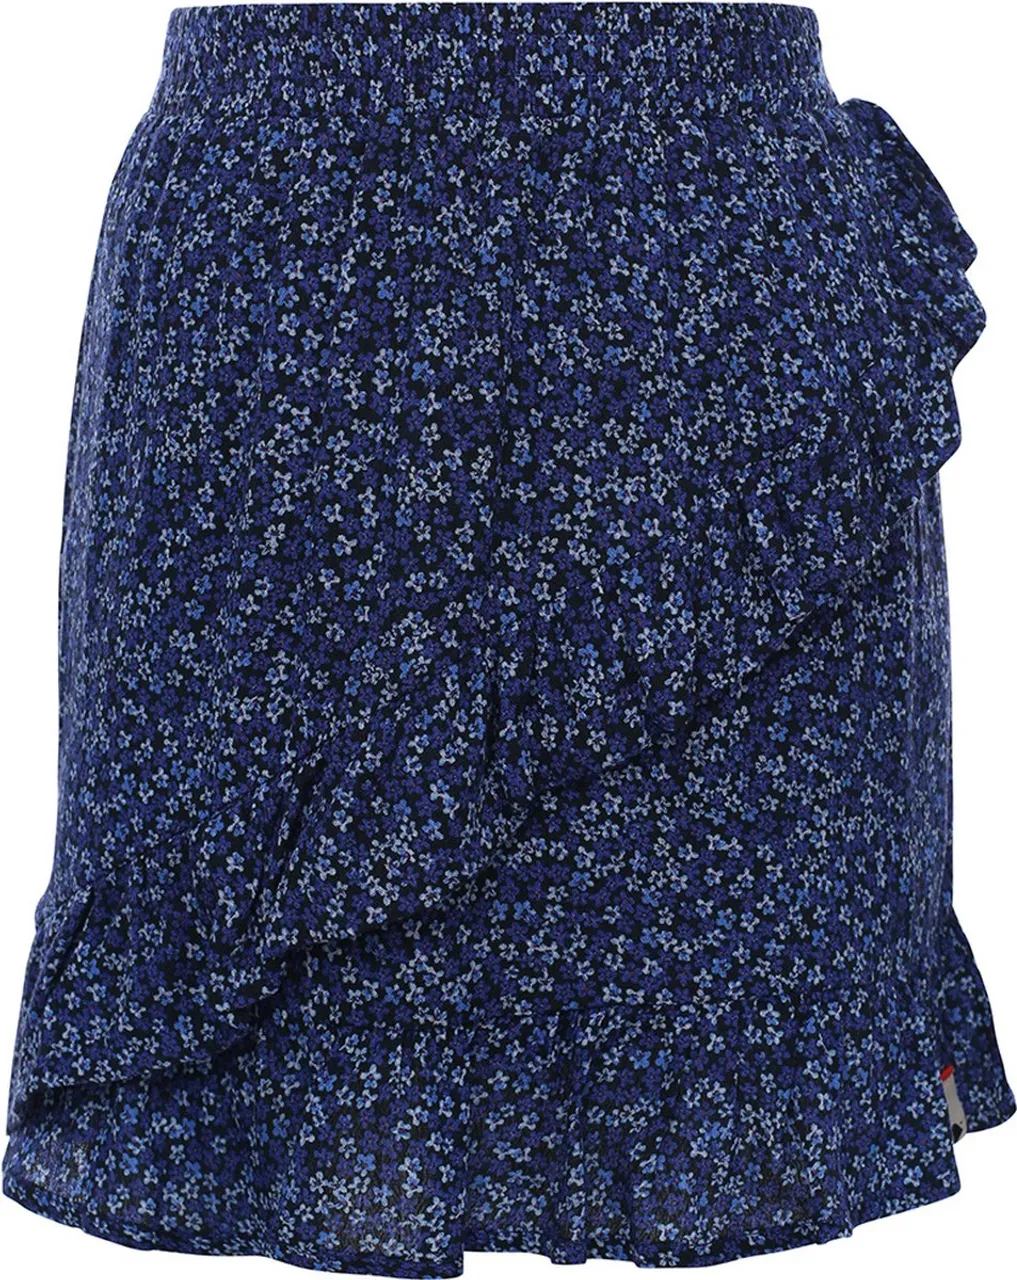 Looxs Revolution Vliolet Flower Skirt Meisjes - Korte rok - Blauw